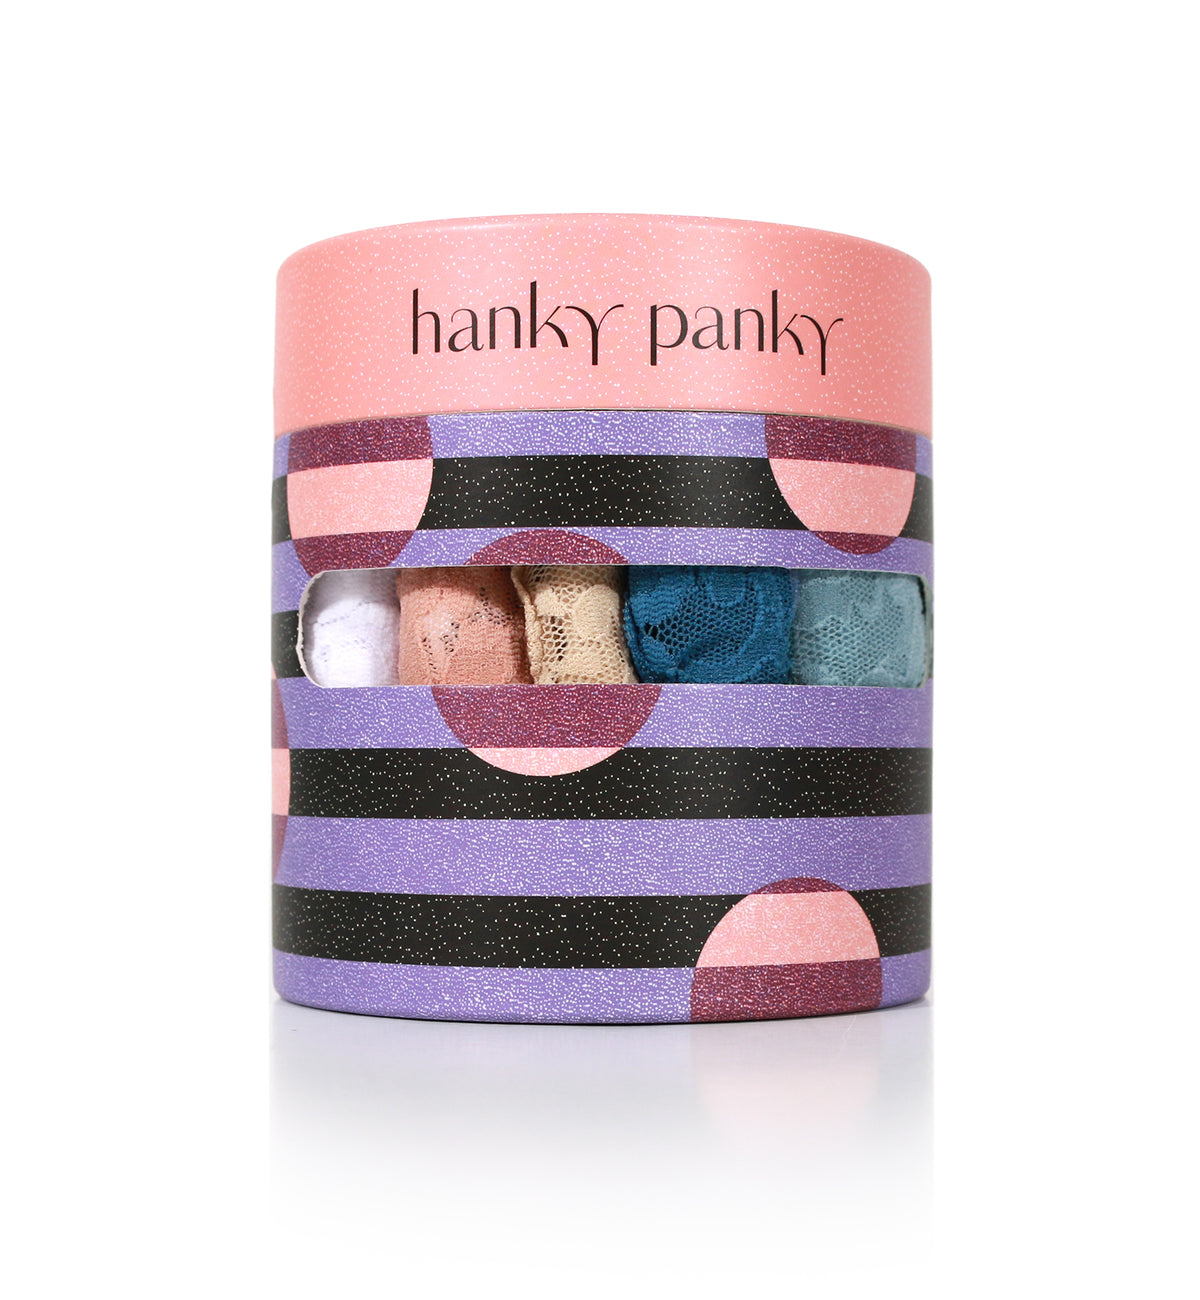 Hanky Panky 5-PACK Signature Lace Original Rise Thong (48115PK),Holiday23 IDCS - IDCS,One Size